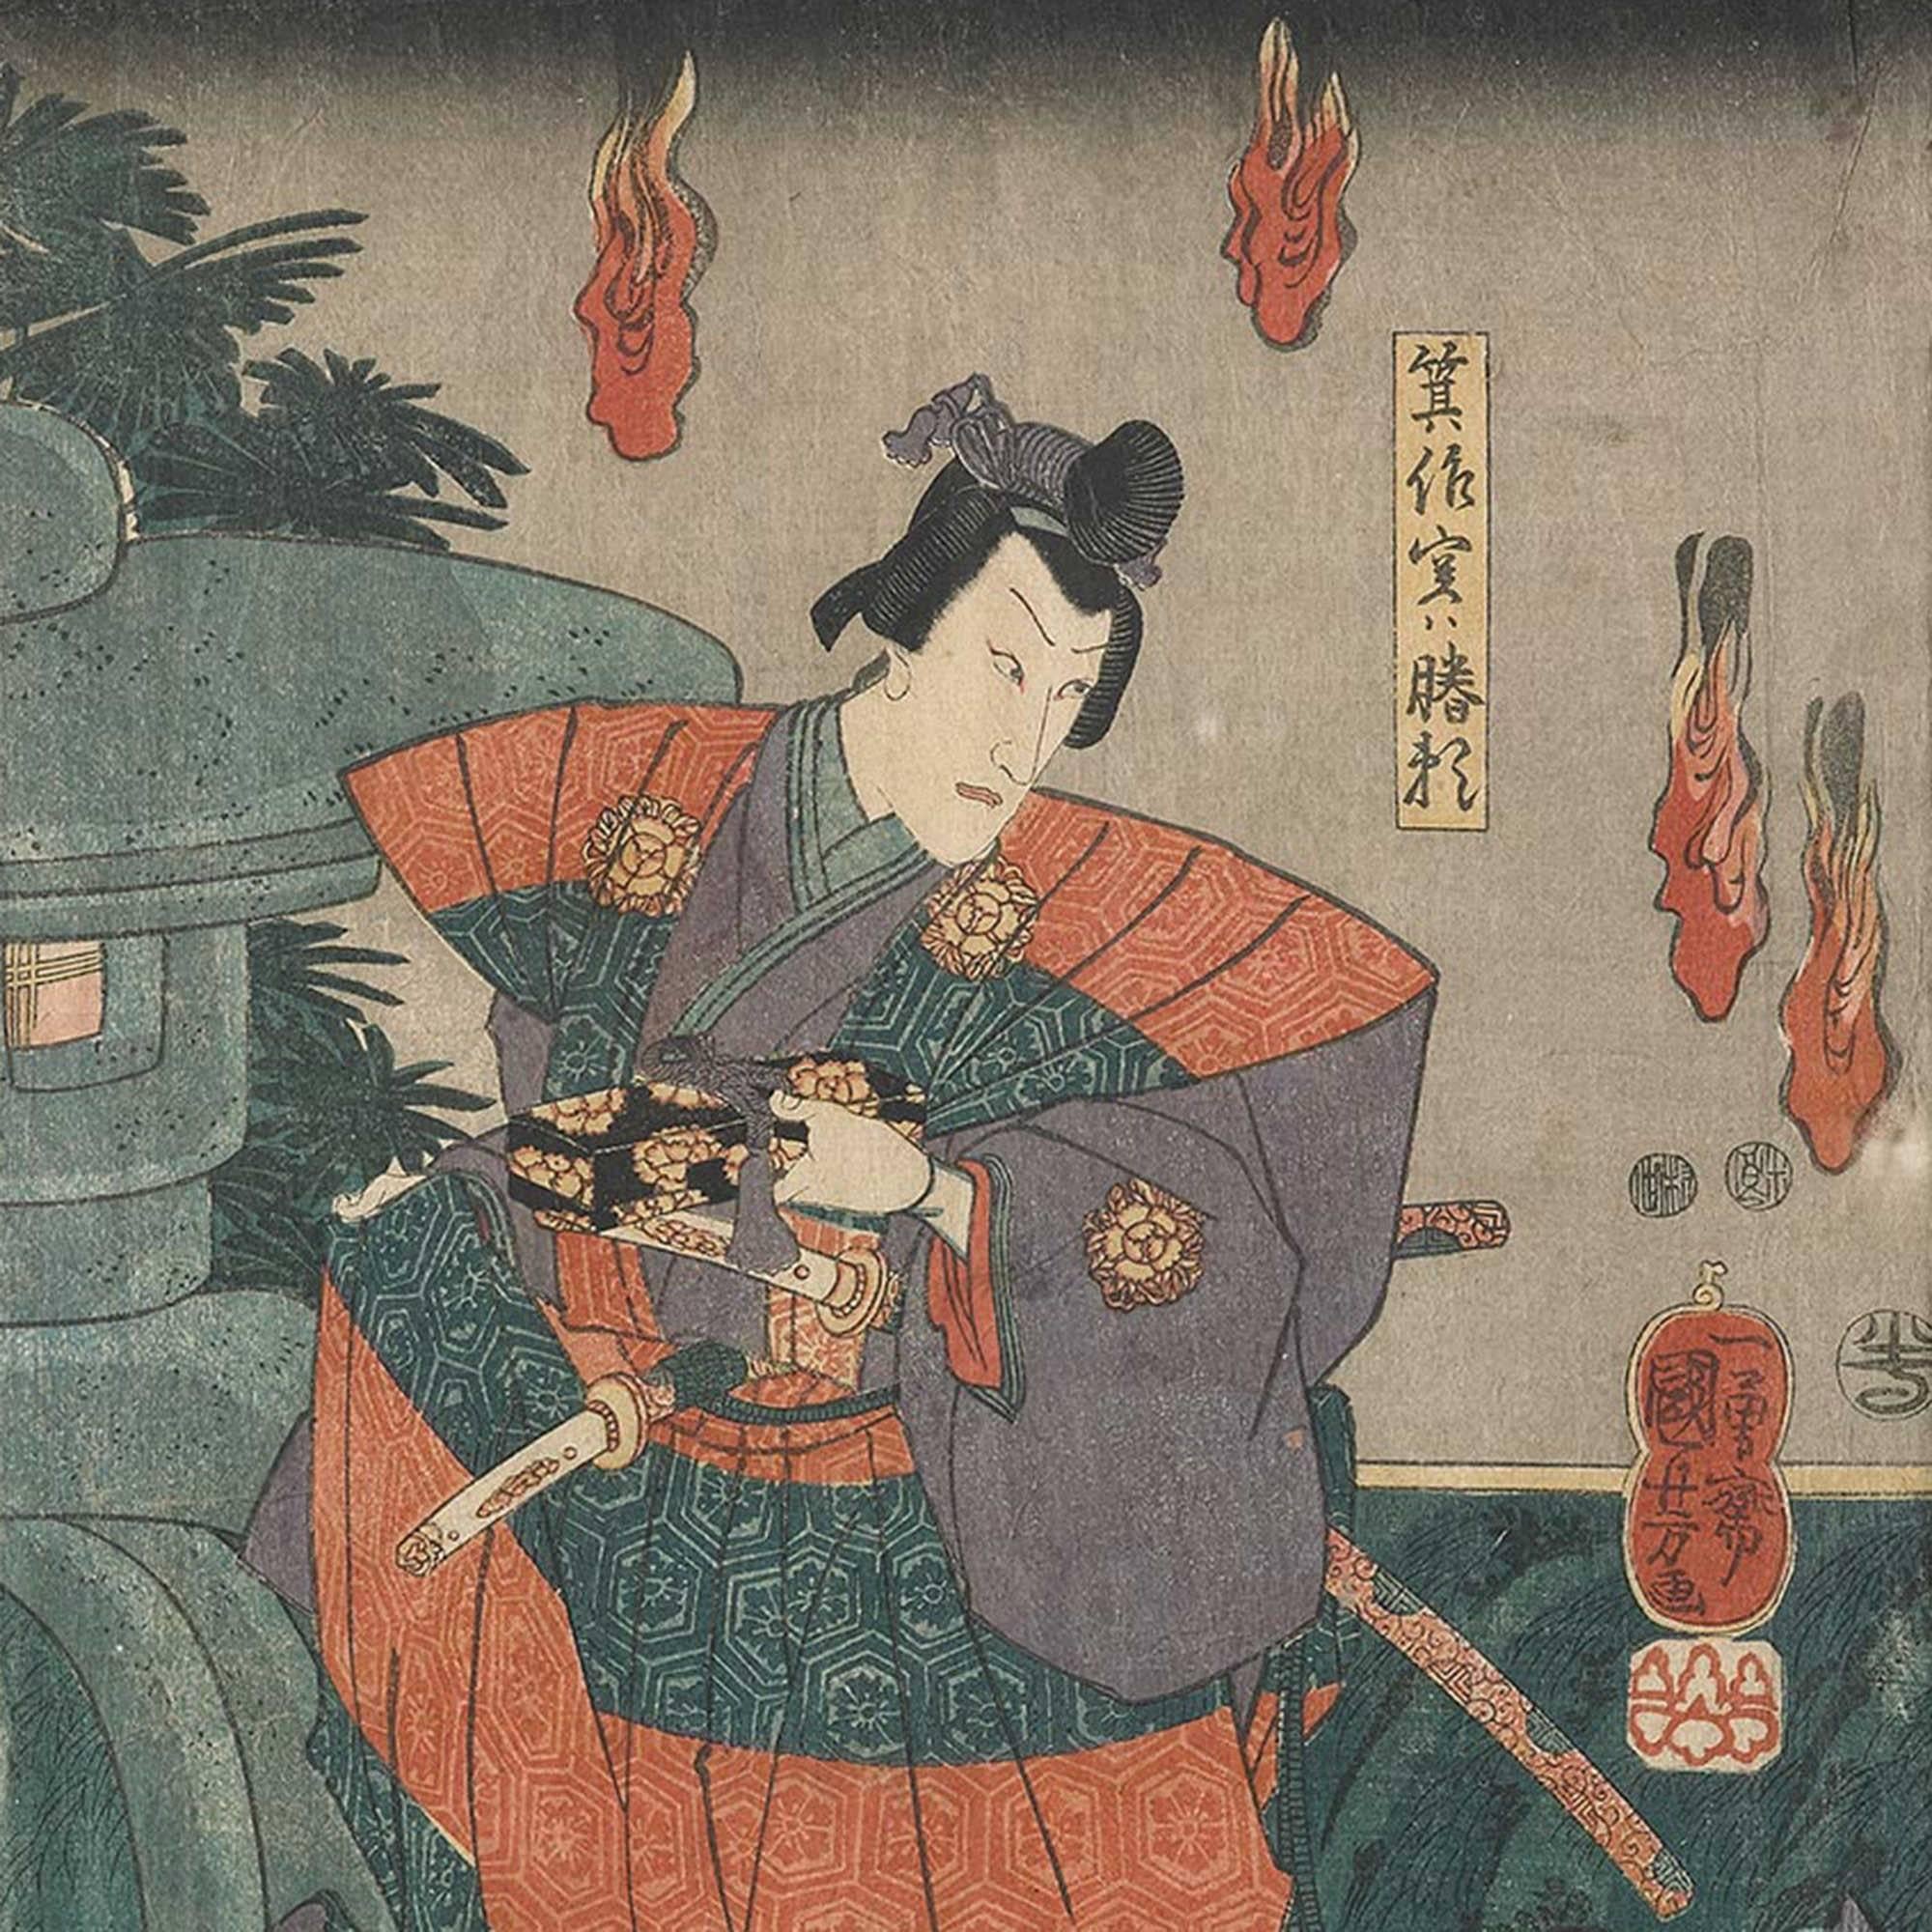 Beautiful Ukiyo-e by Toyokuny III. This ancient woodblock print representing a scene of kabuky theatre.